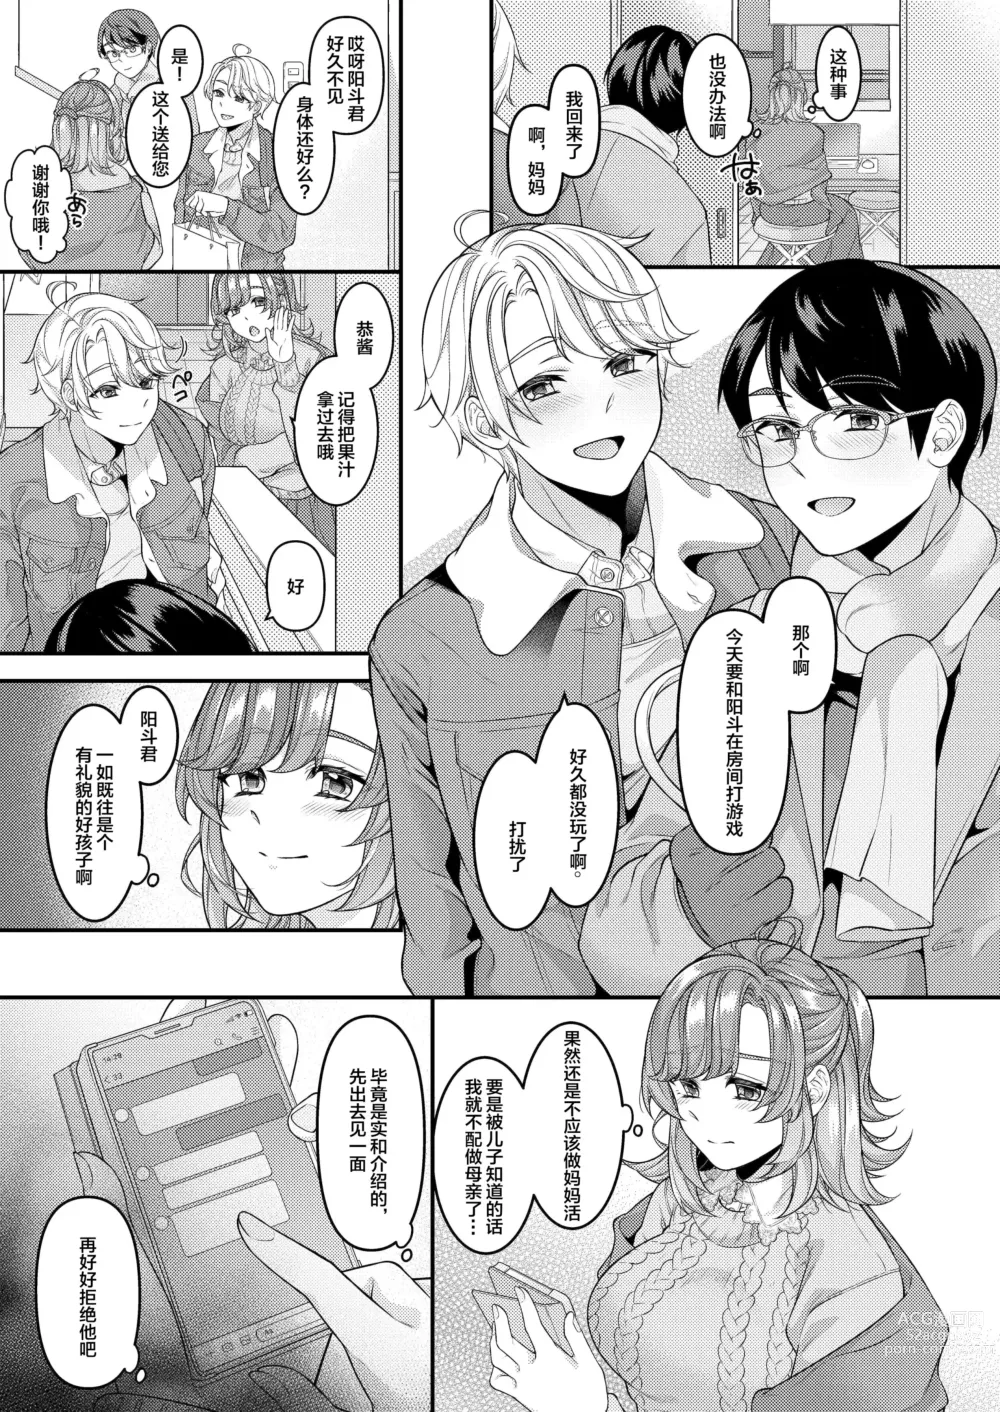 Page 4 of doujinshi Okaa-san, Mamakatsu ni Hamattemasu - Im addicted to feeling good with young guys.